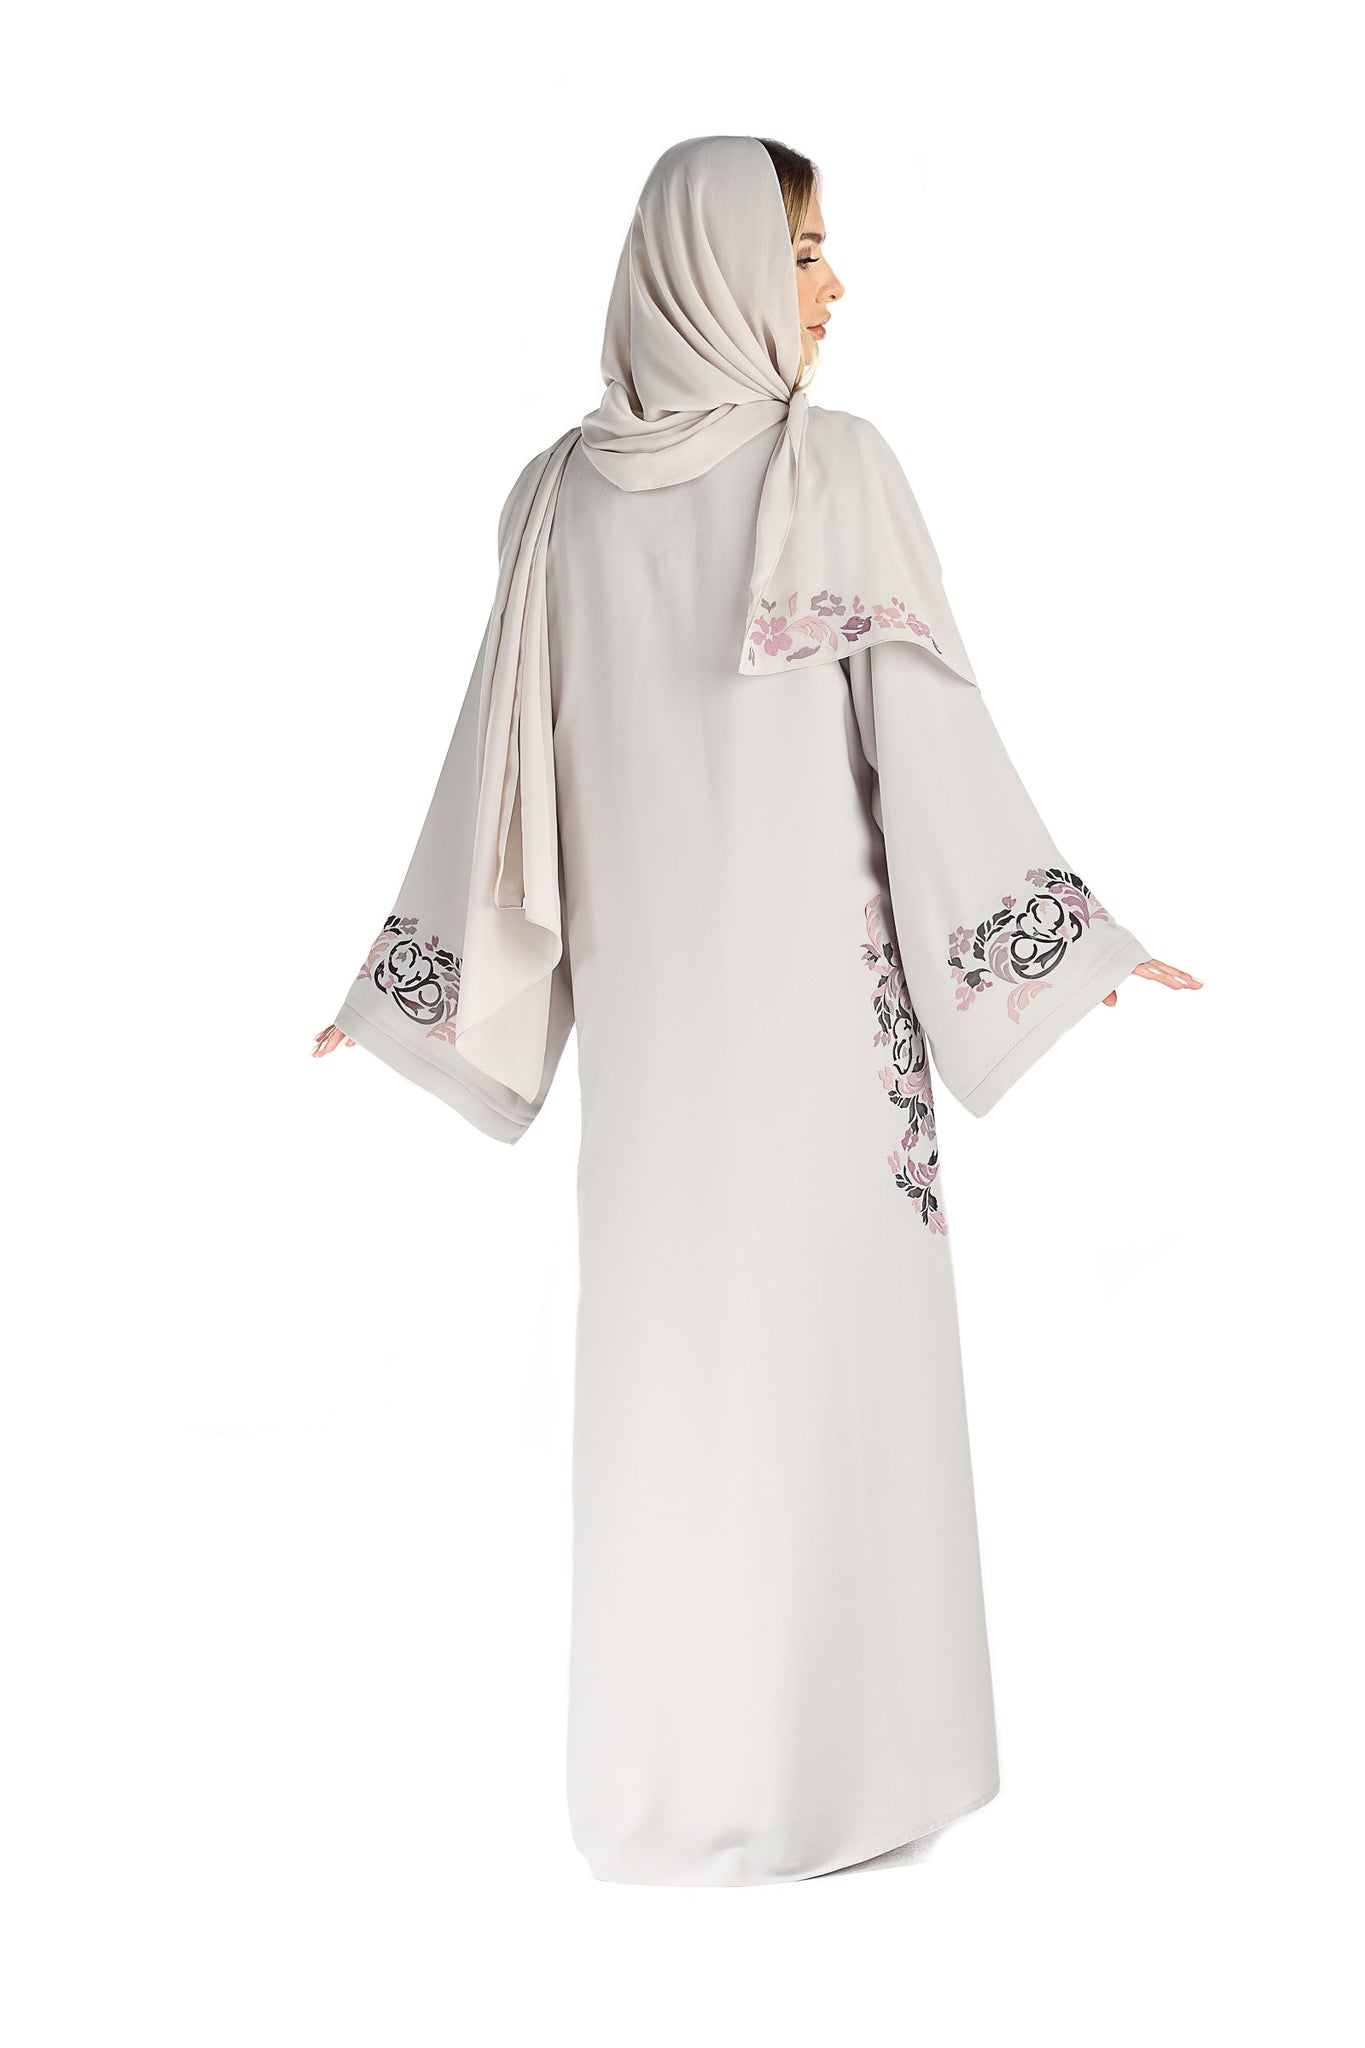 Hanayen Colour Abaya With Embroidery